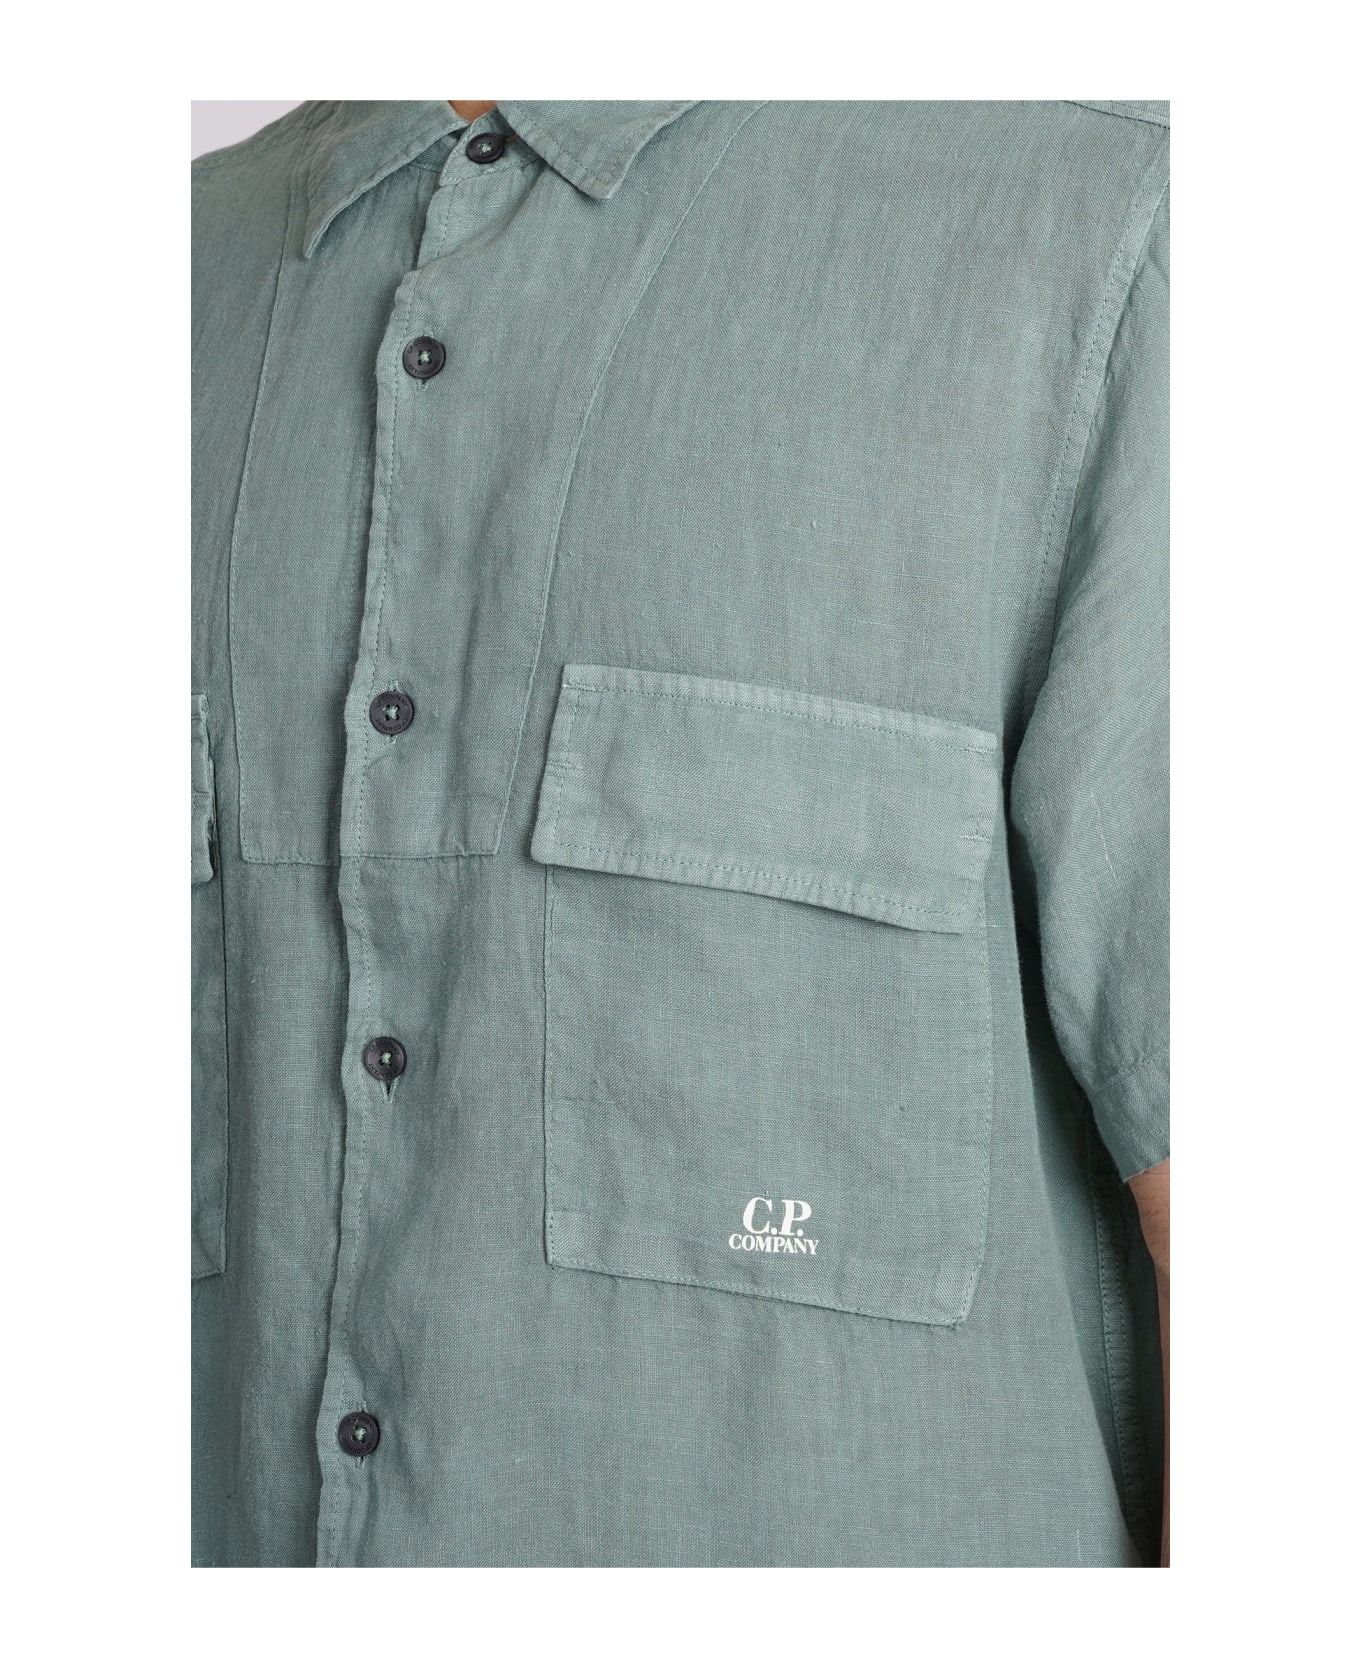 C.P. Company Shirt In Green Linen - green